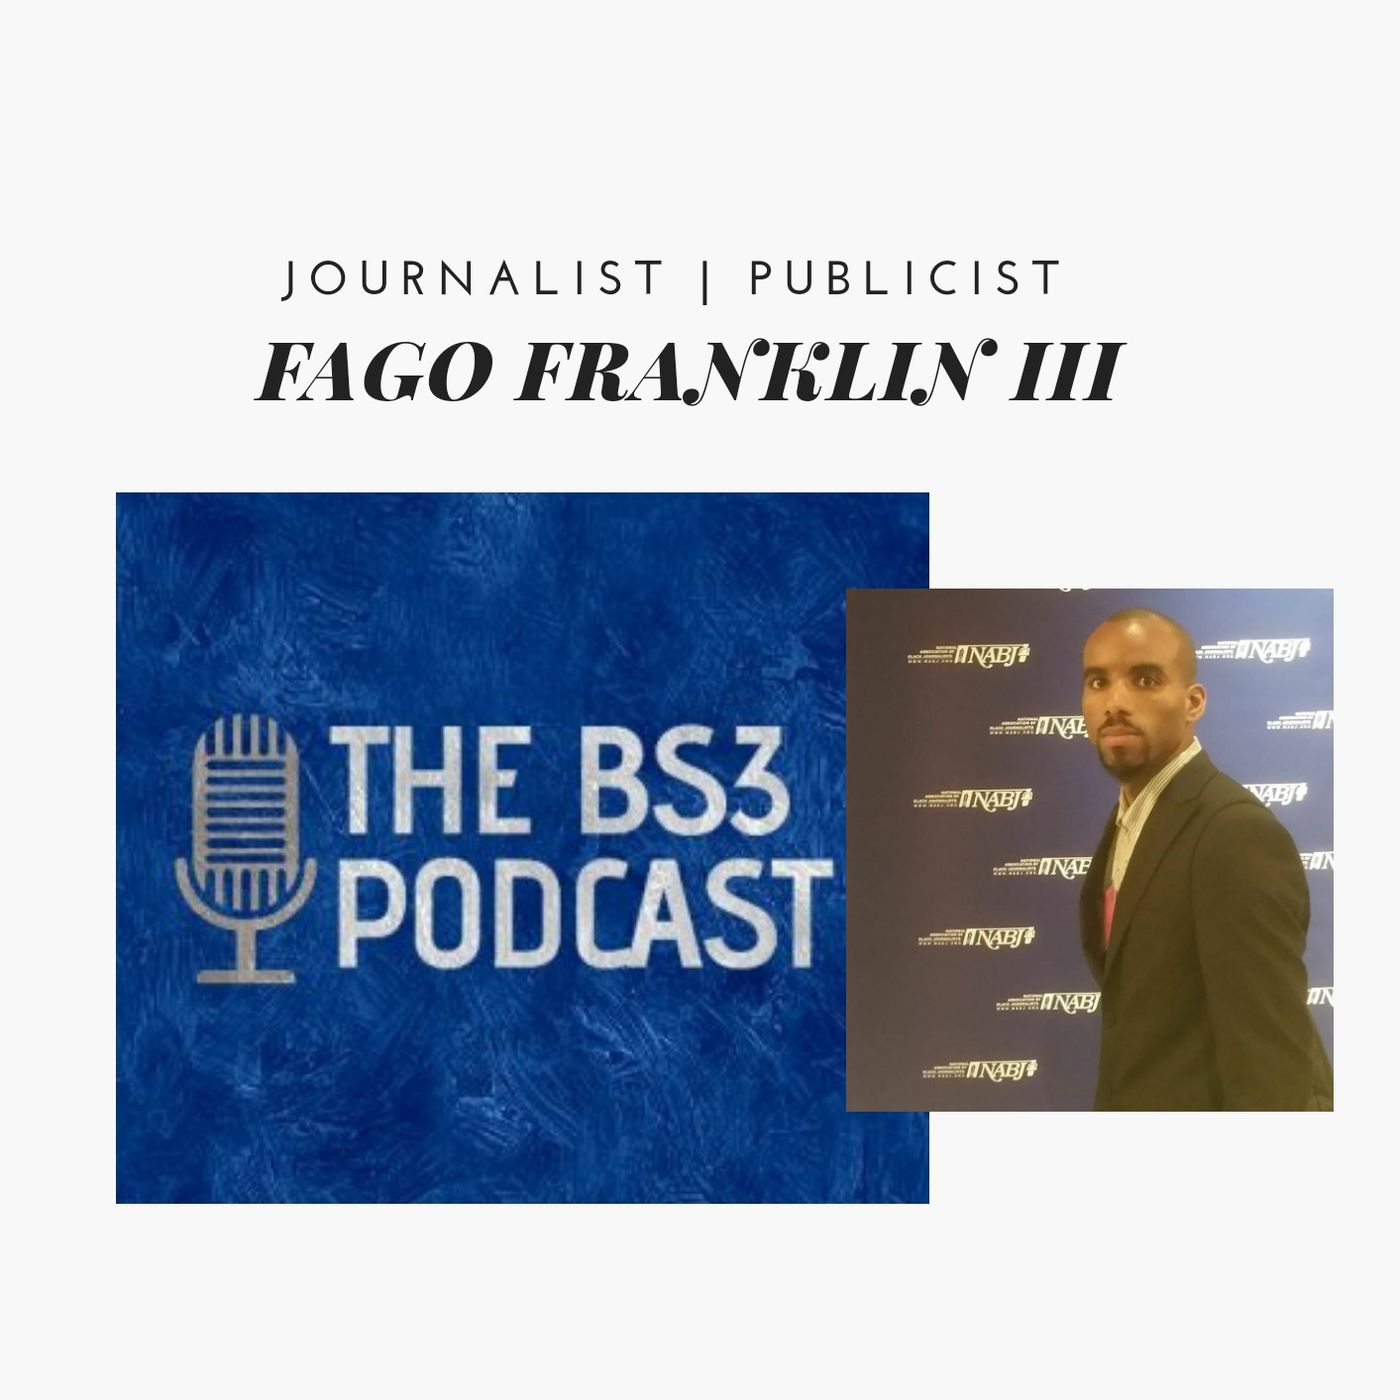 Featured Interview: Journalist/Publicist Fago Franklin III